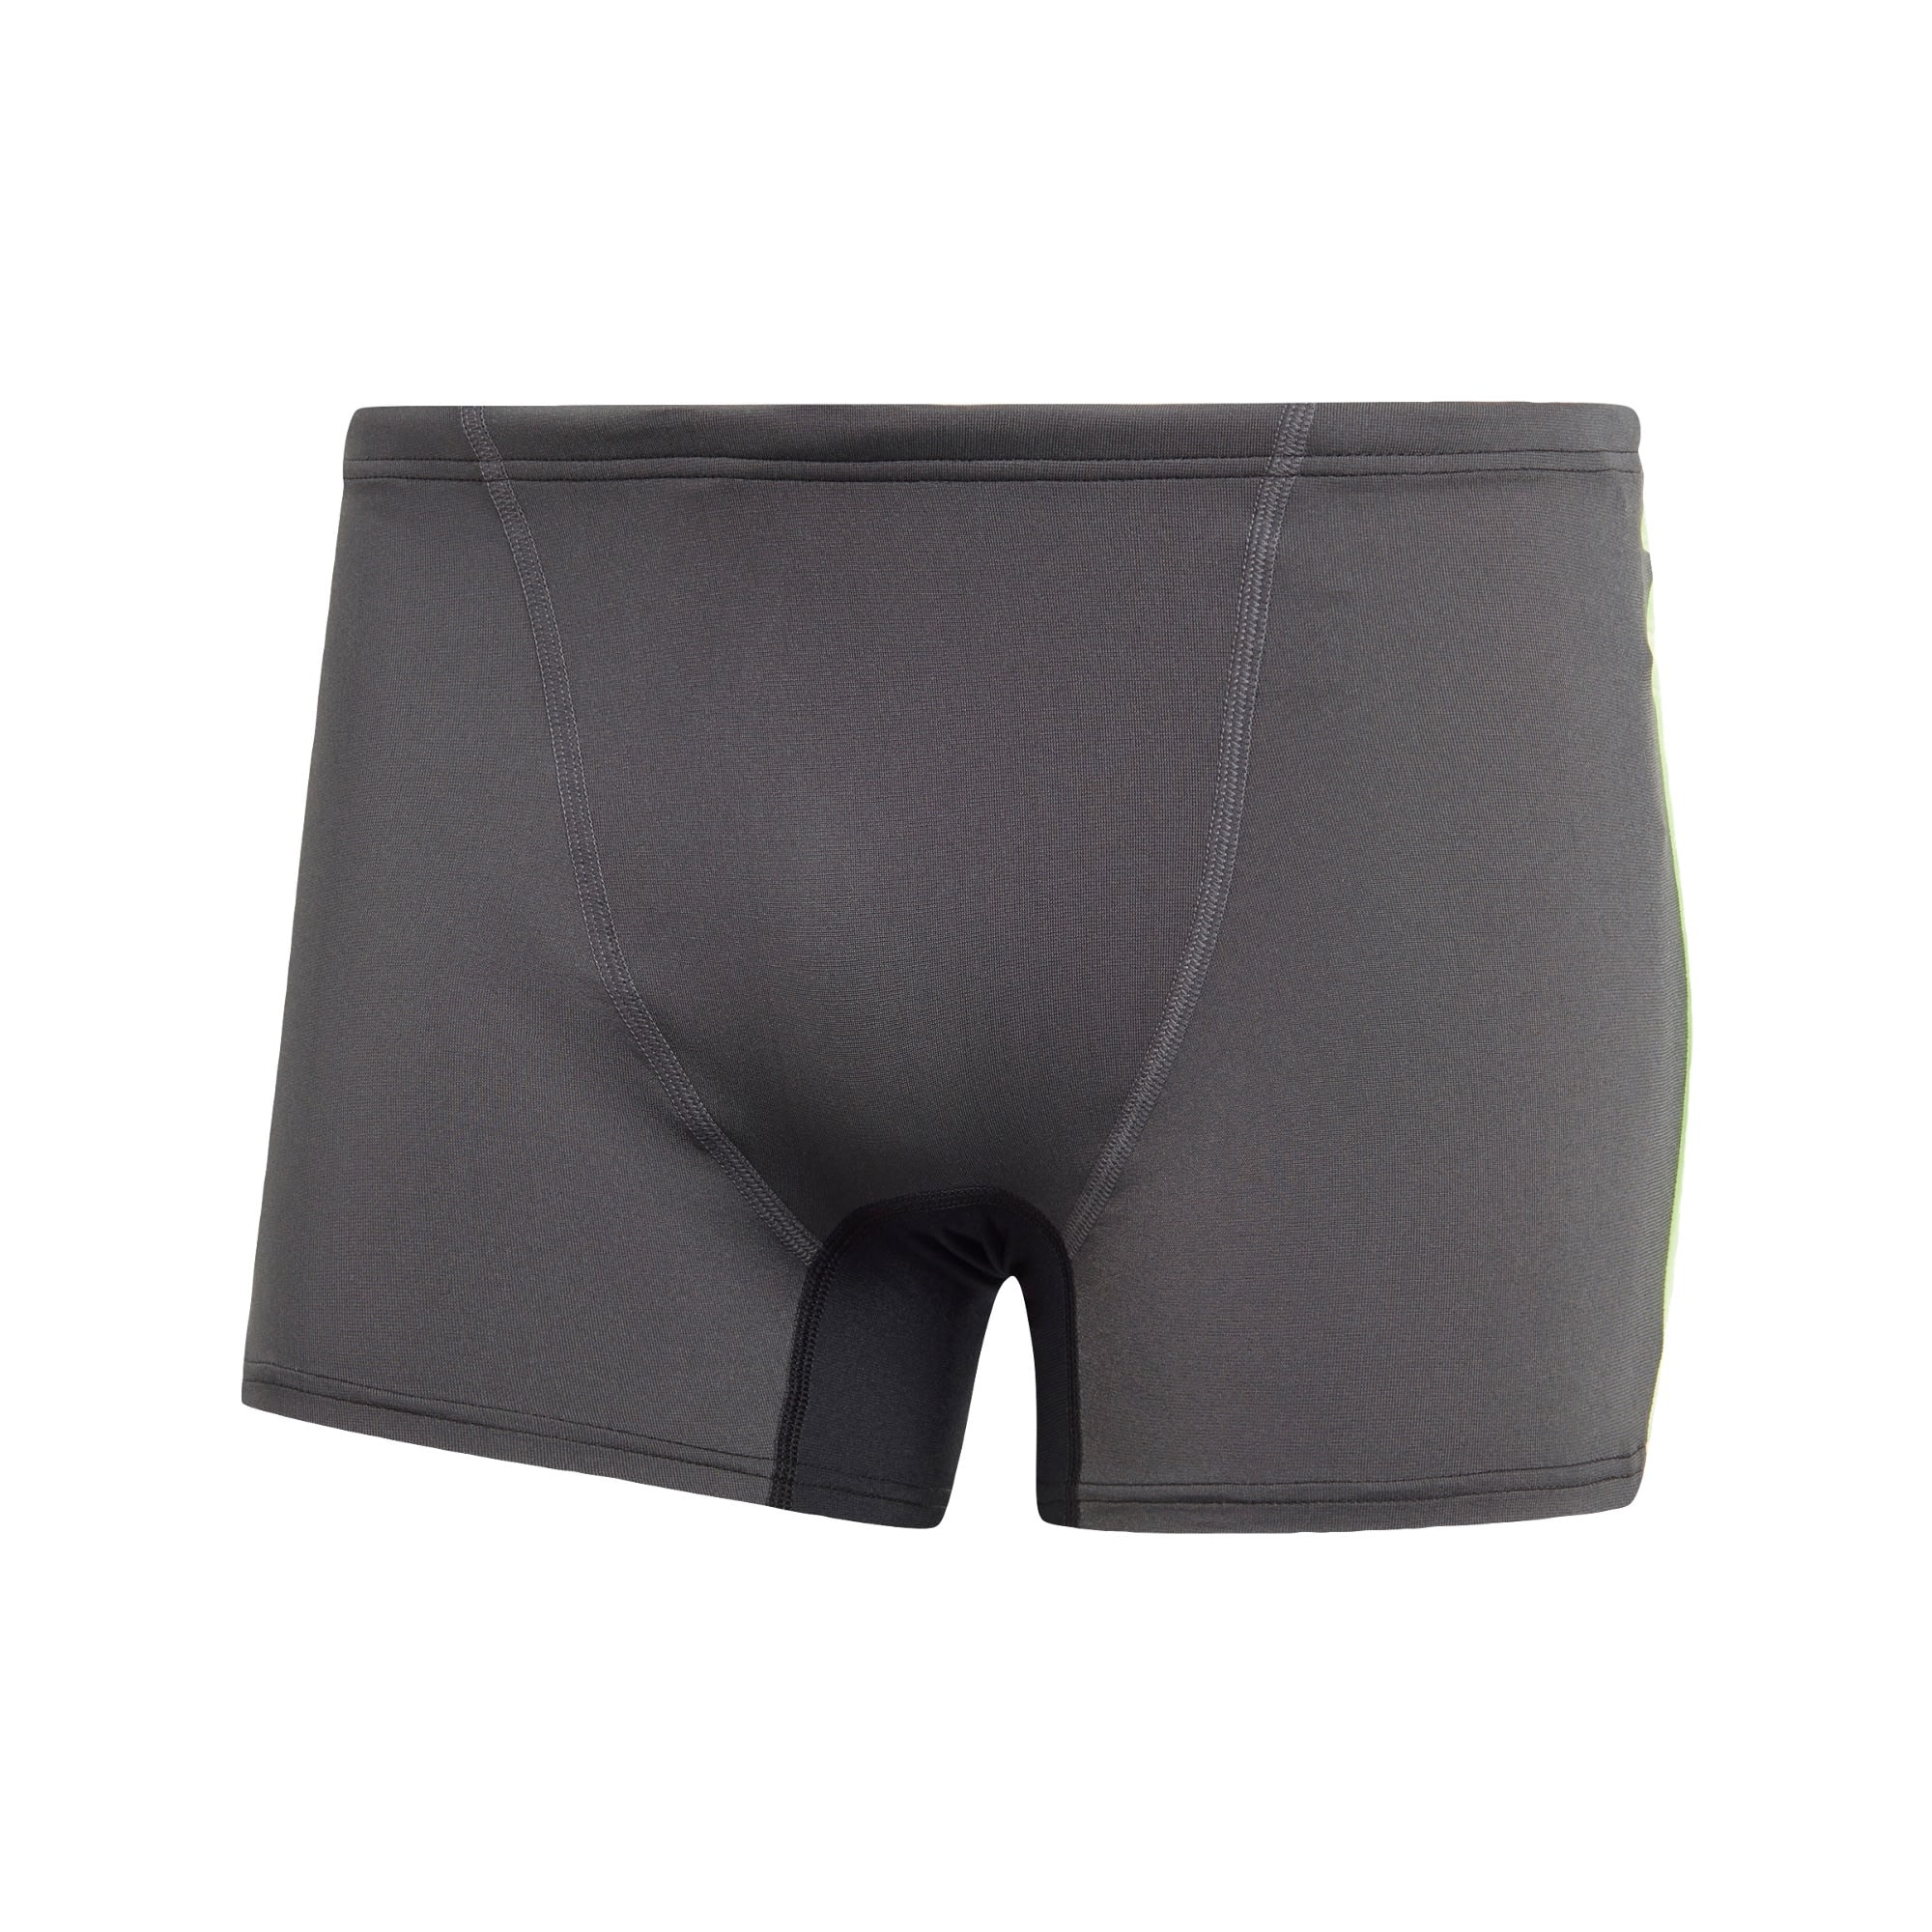 ADIDAS PERFORMANCE Športne kopalne hlače  apno / siva / črna